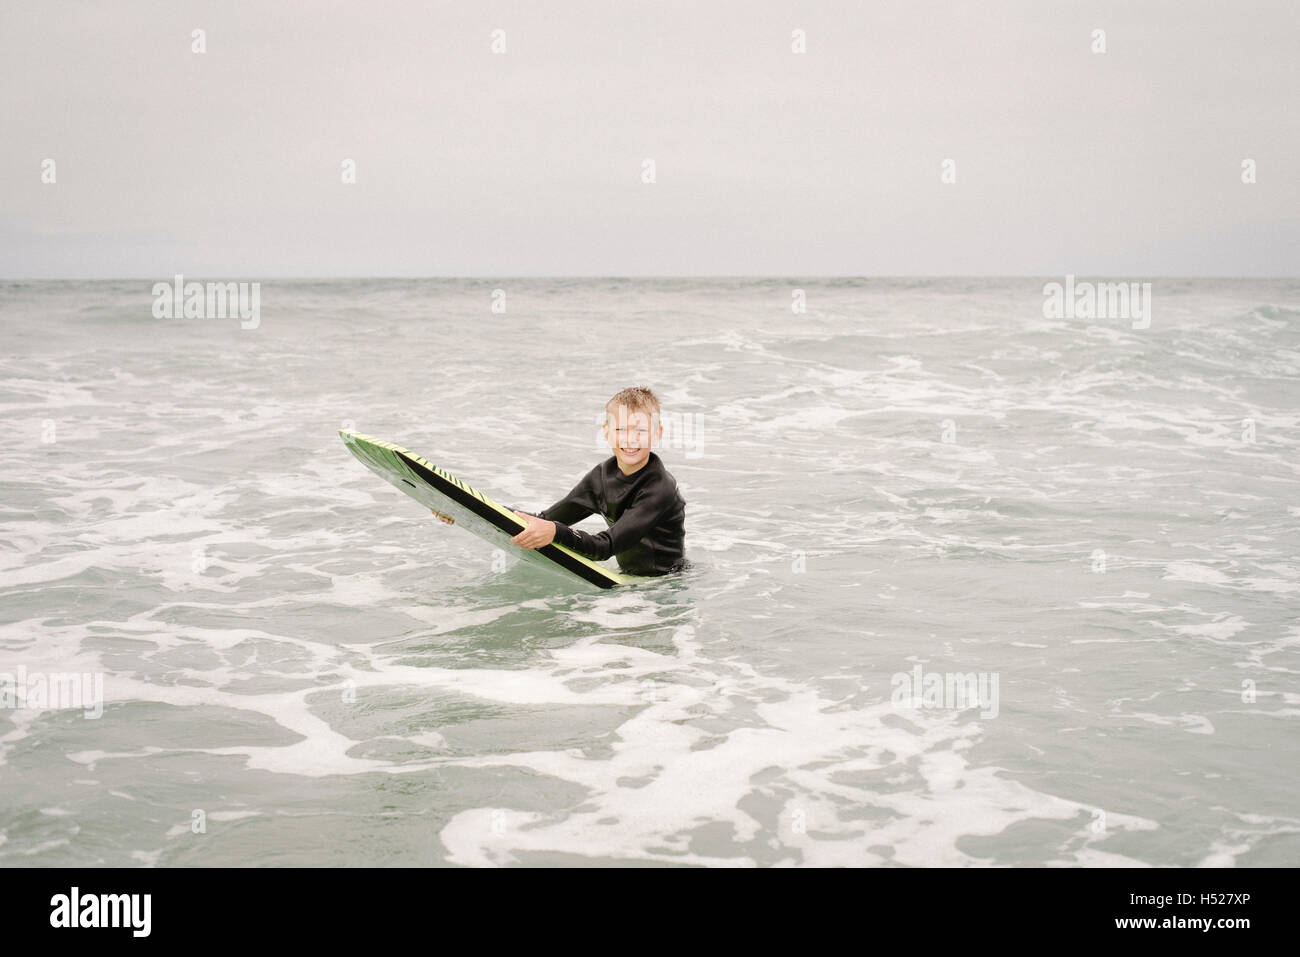 Blond boy bodyboarding in the ocean. Stock Photo